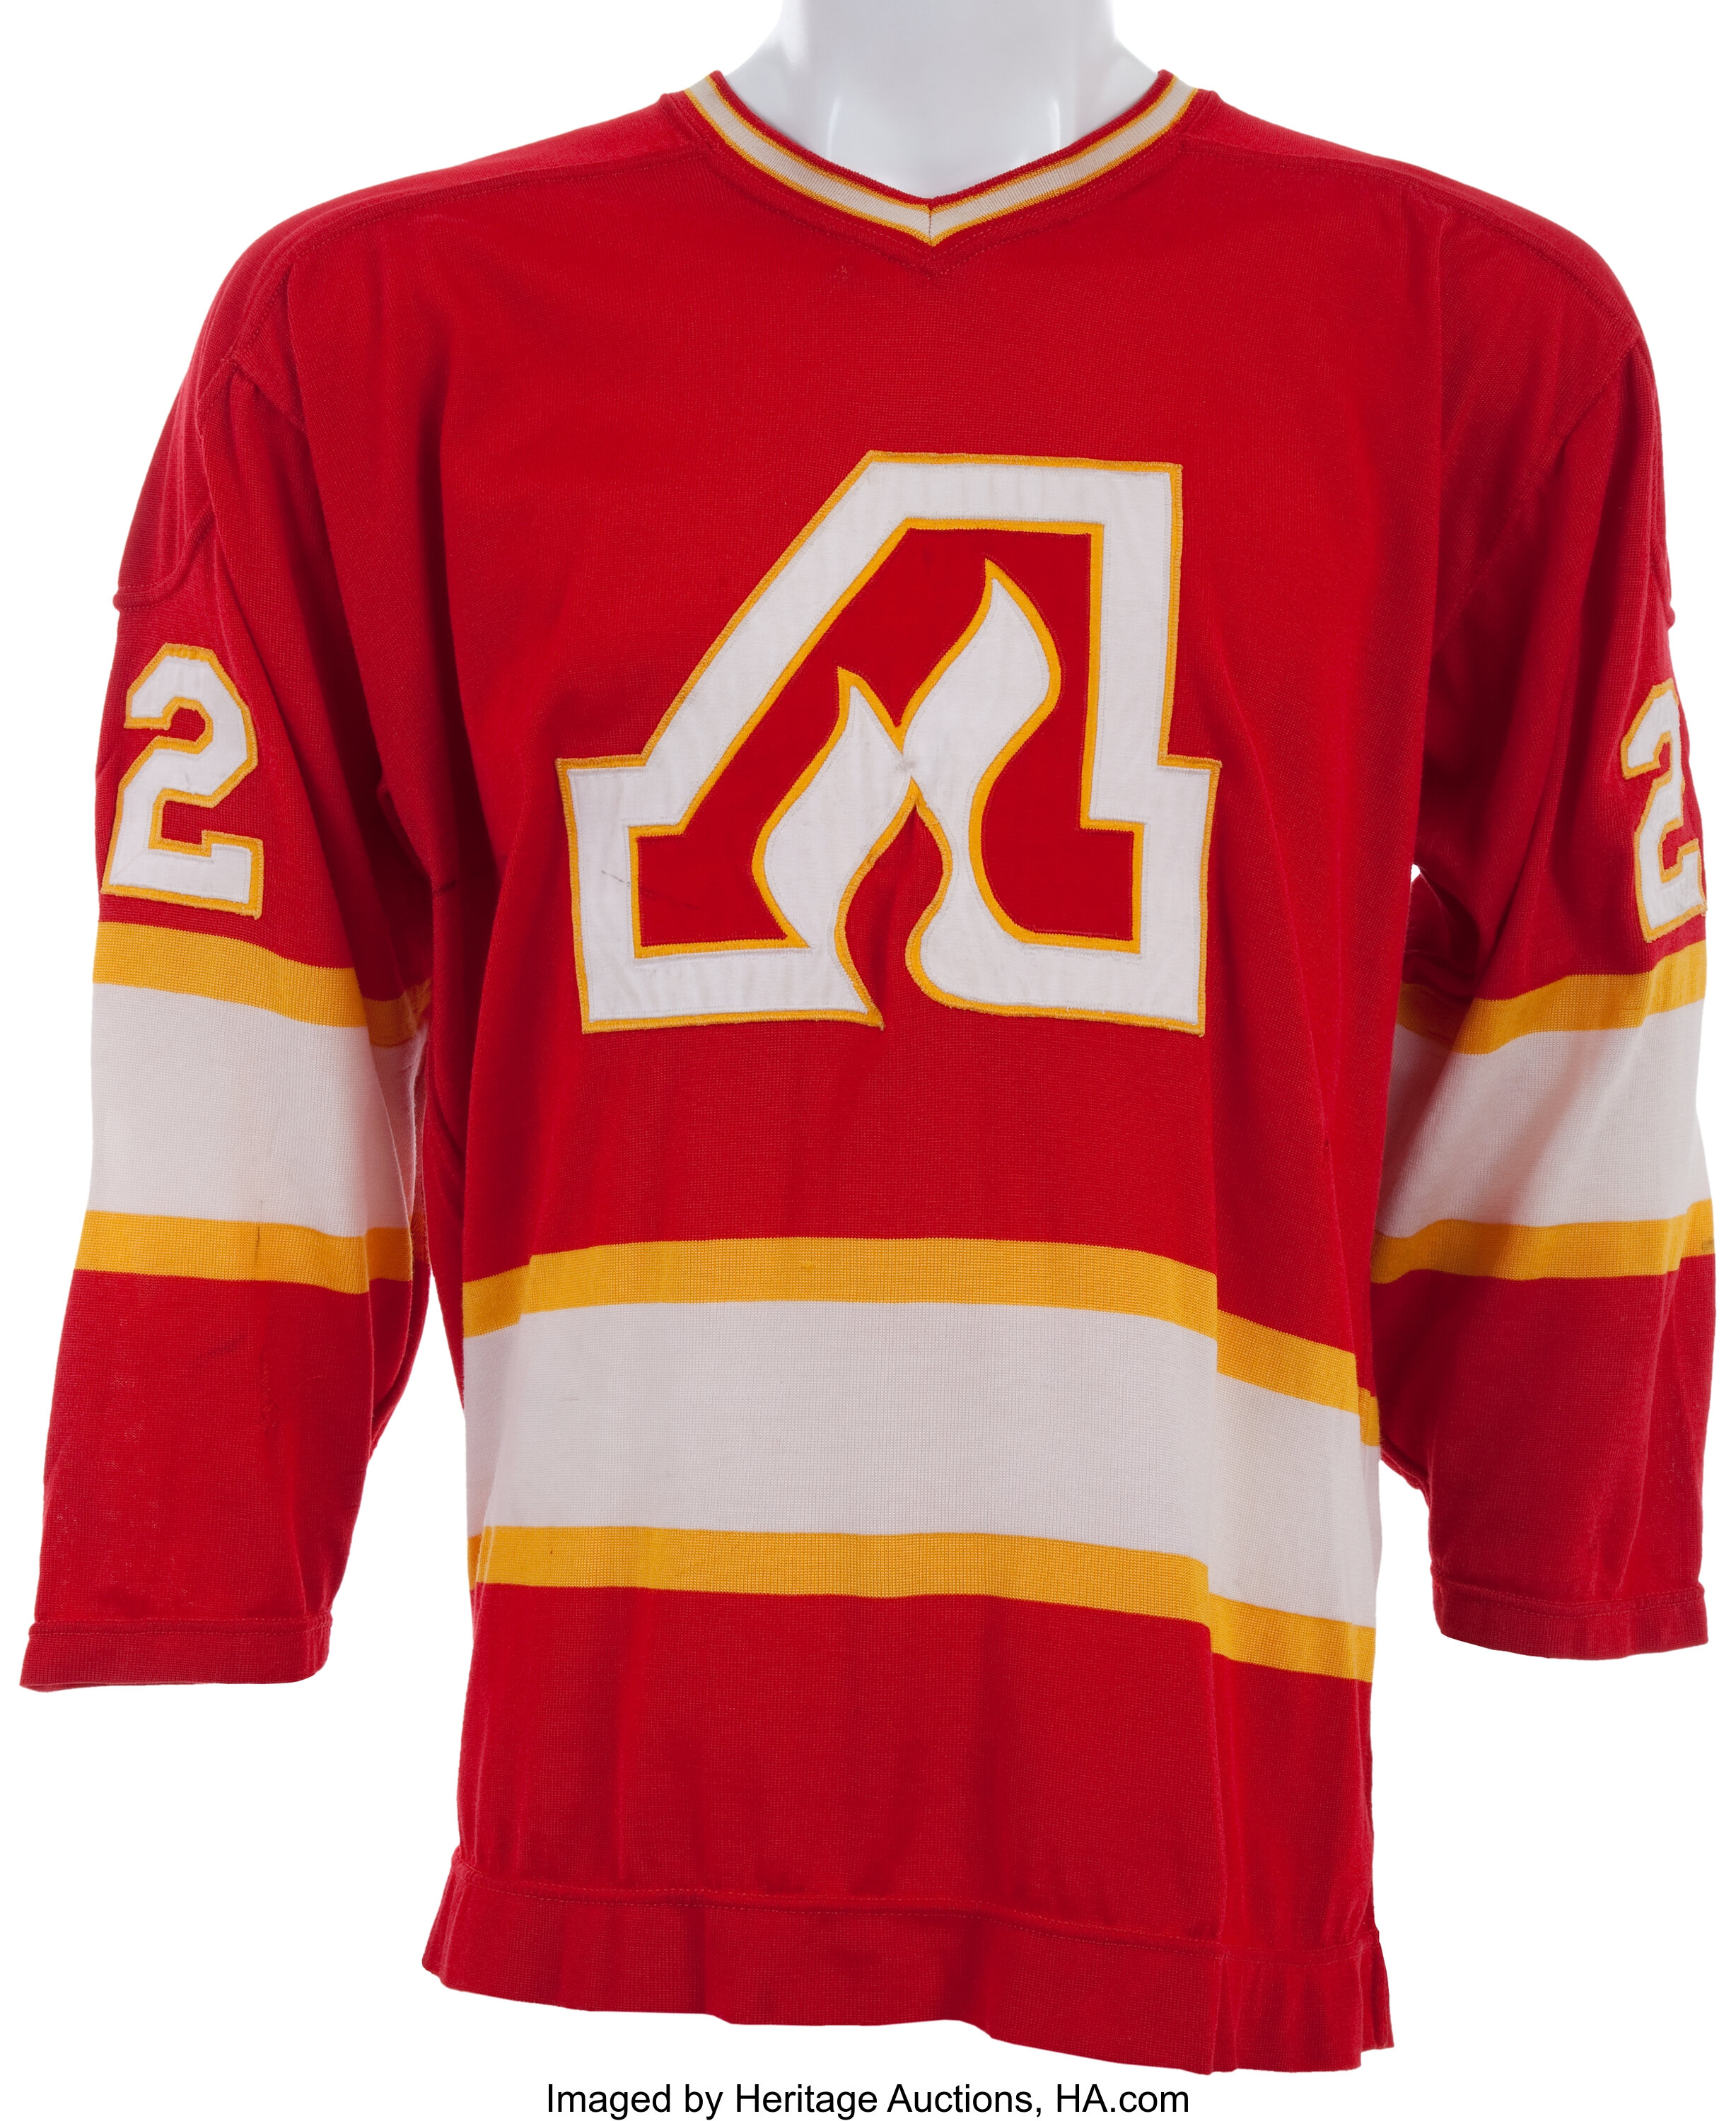 Calgary Flames on X: In 1972, the Atlanta Flames were born